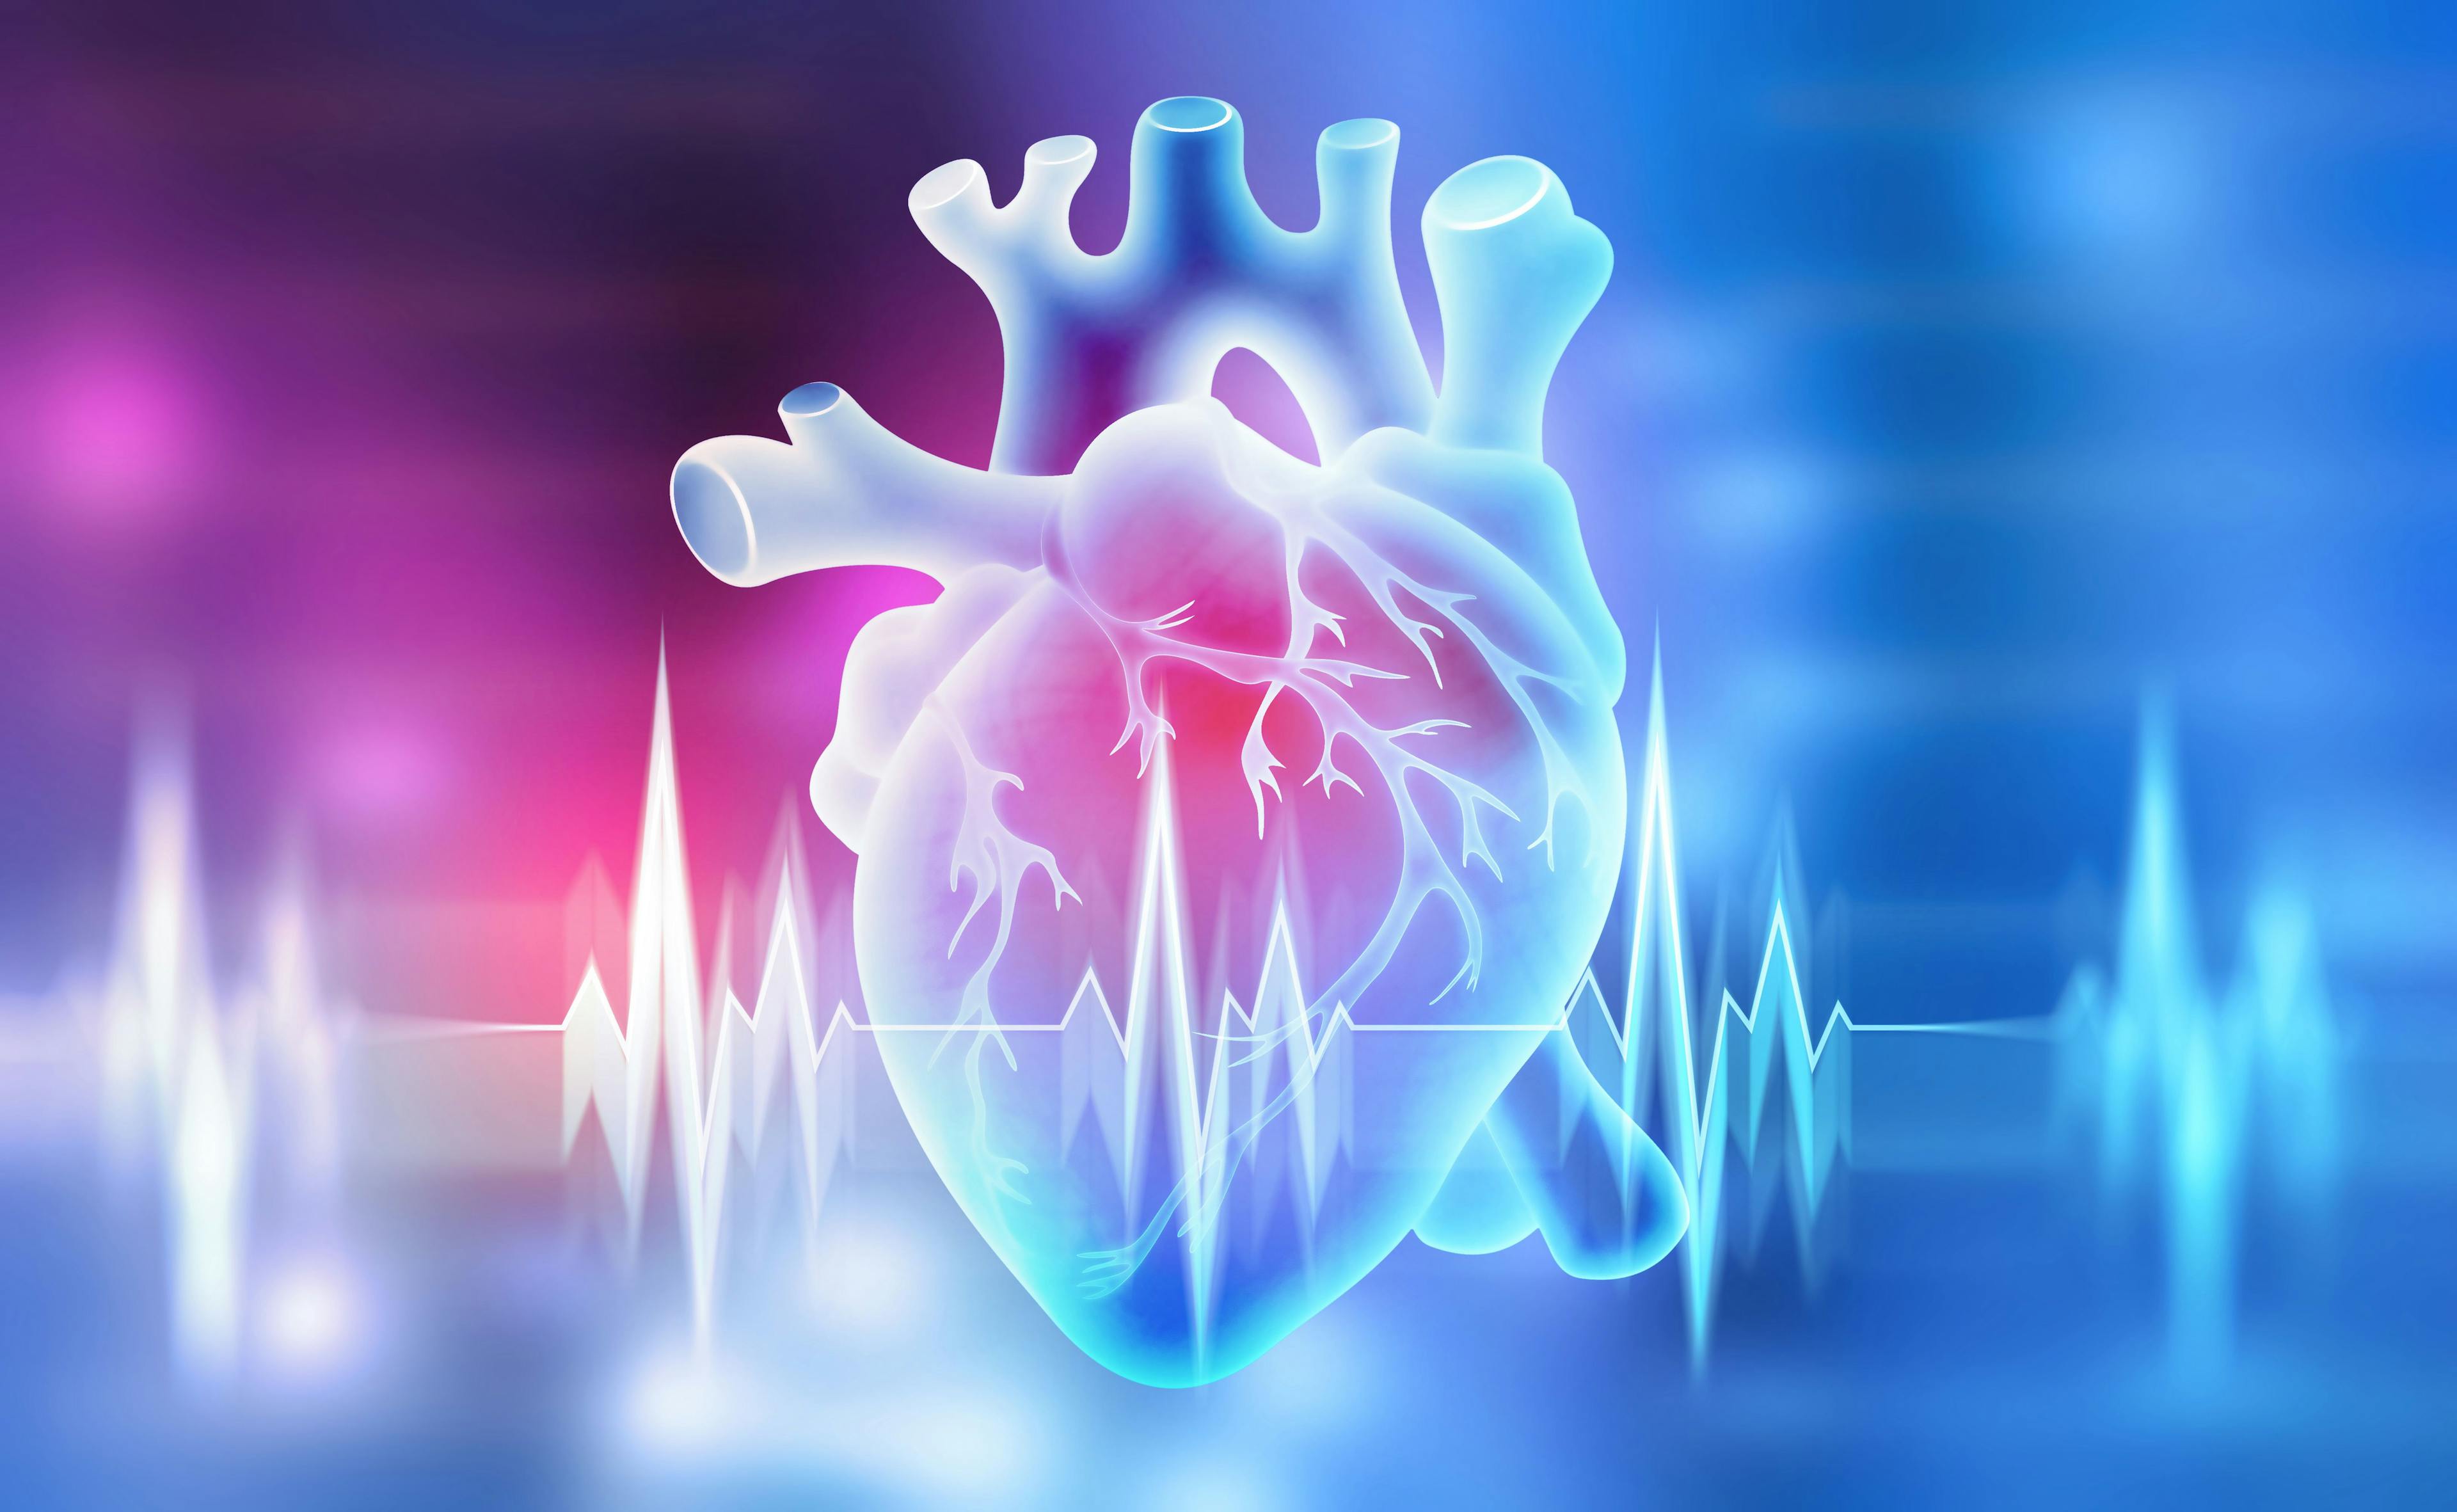 Heart animation | Image Credit: Siarhei - stock.adobe.com